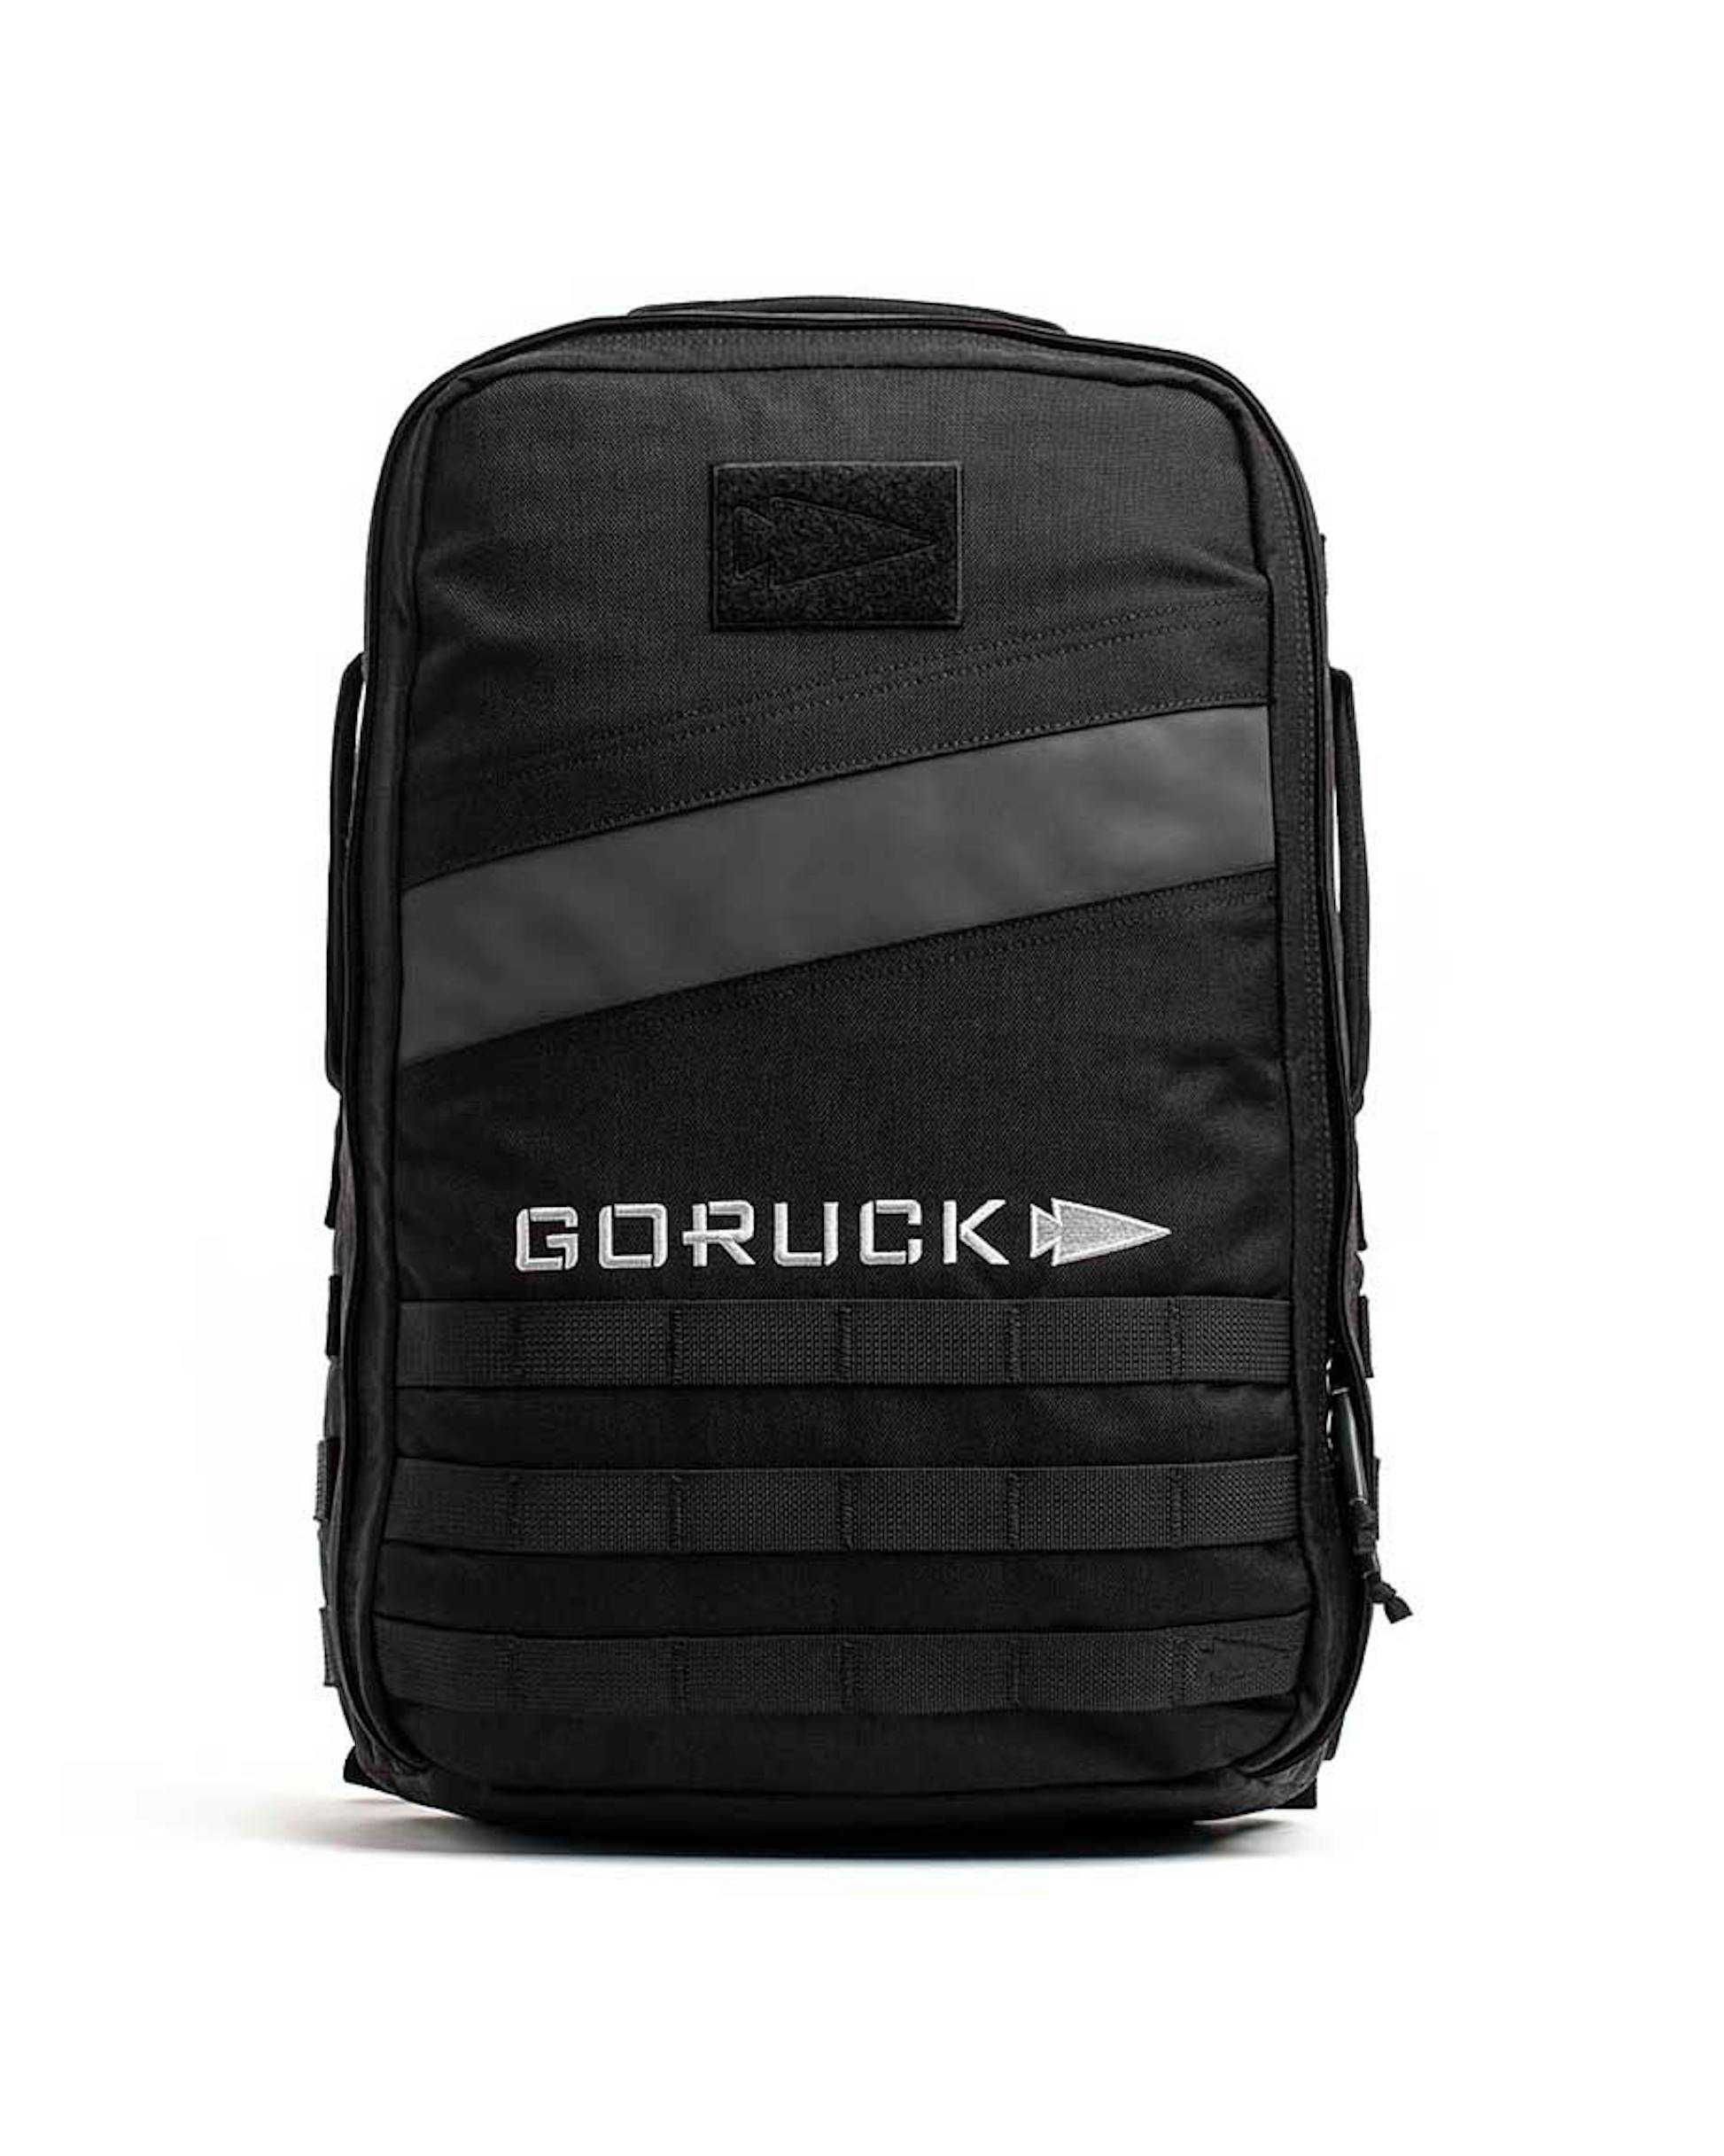 Rucker 4.0 Backpack - 20L